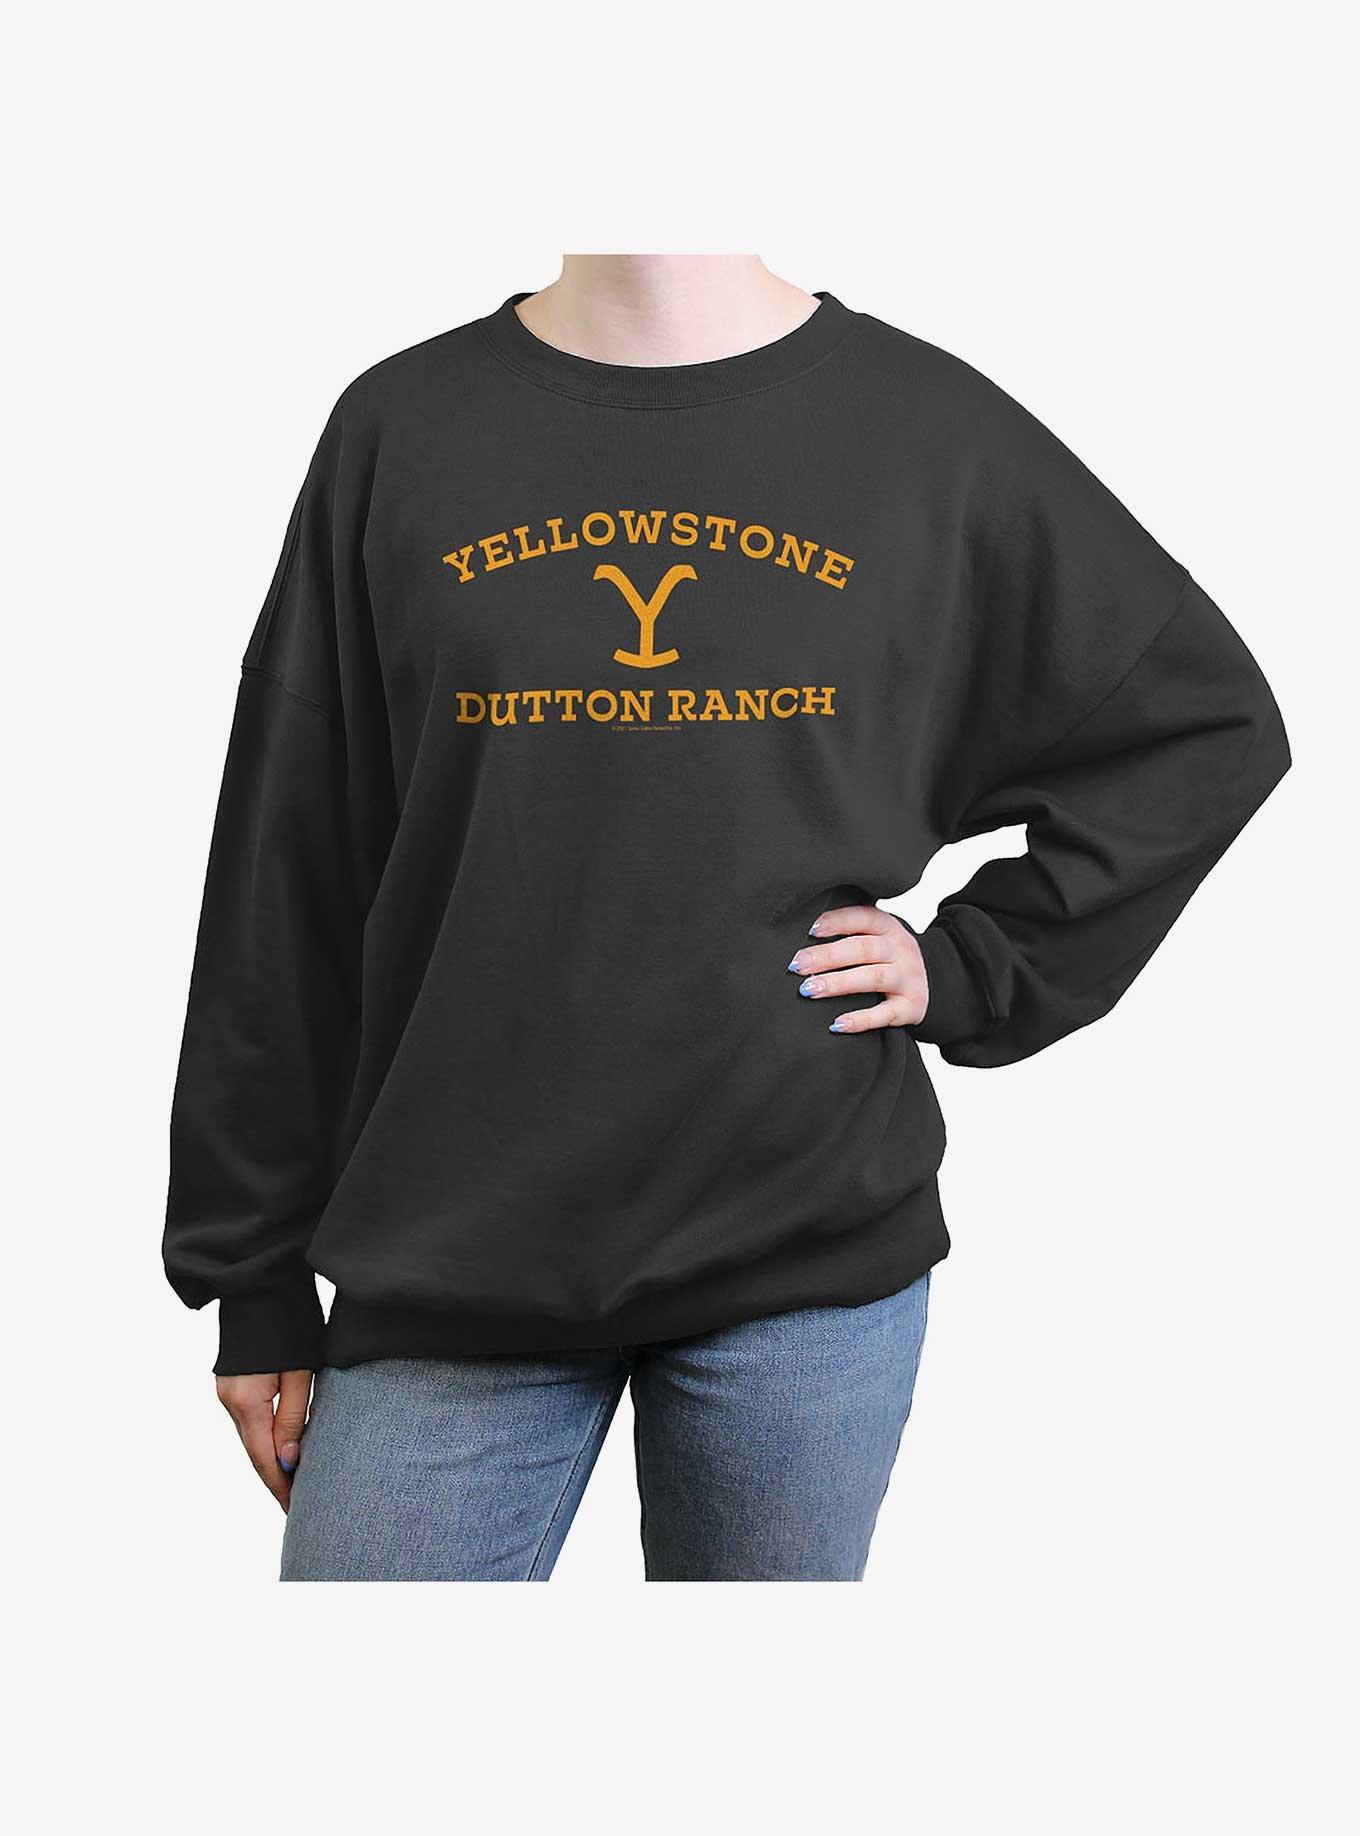 Yellowstone Dutton Ranch Logo Girls Oversized Sweatshirt, CHARCOAL, hi-res